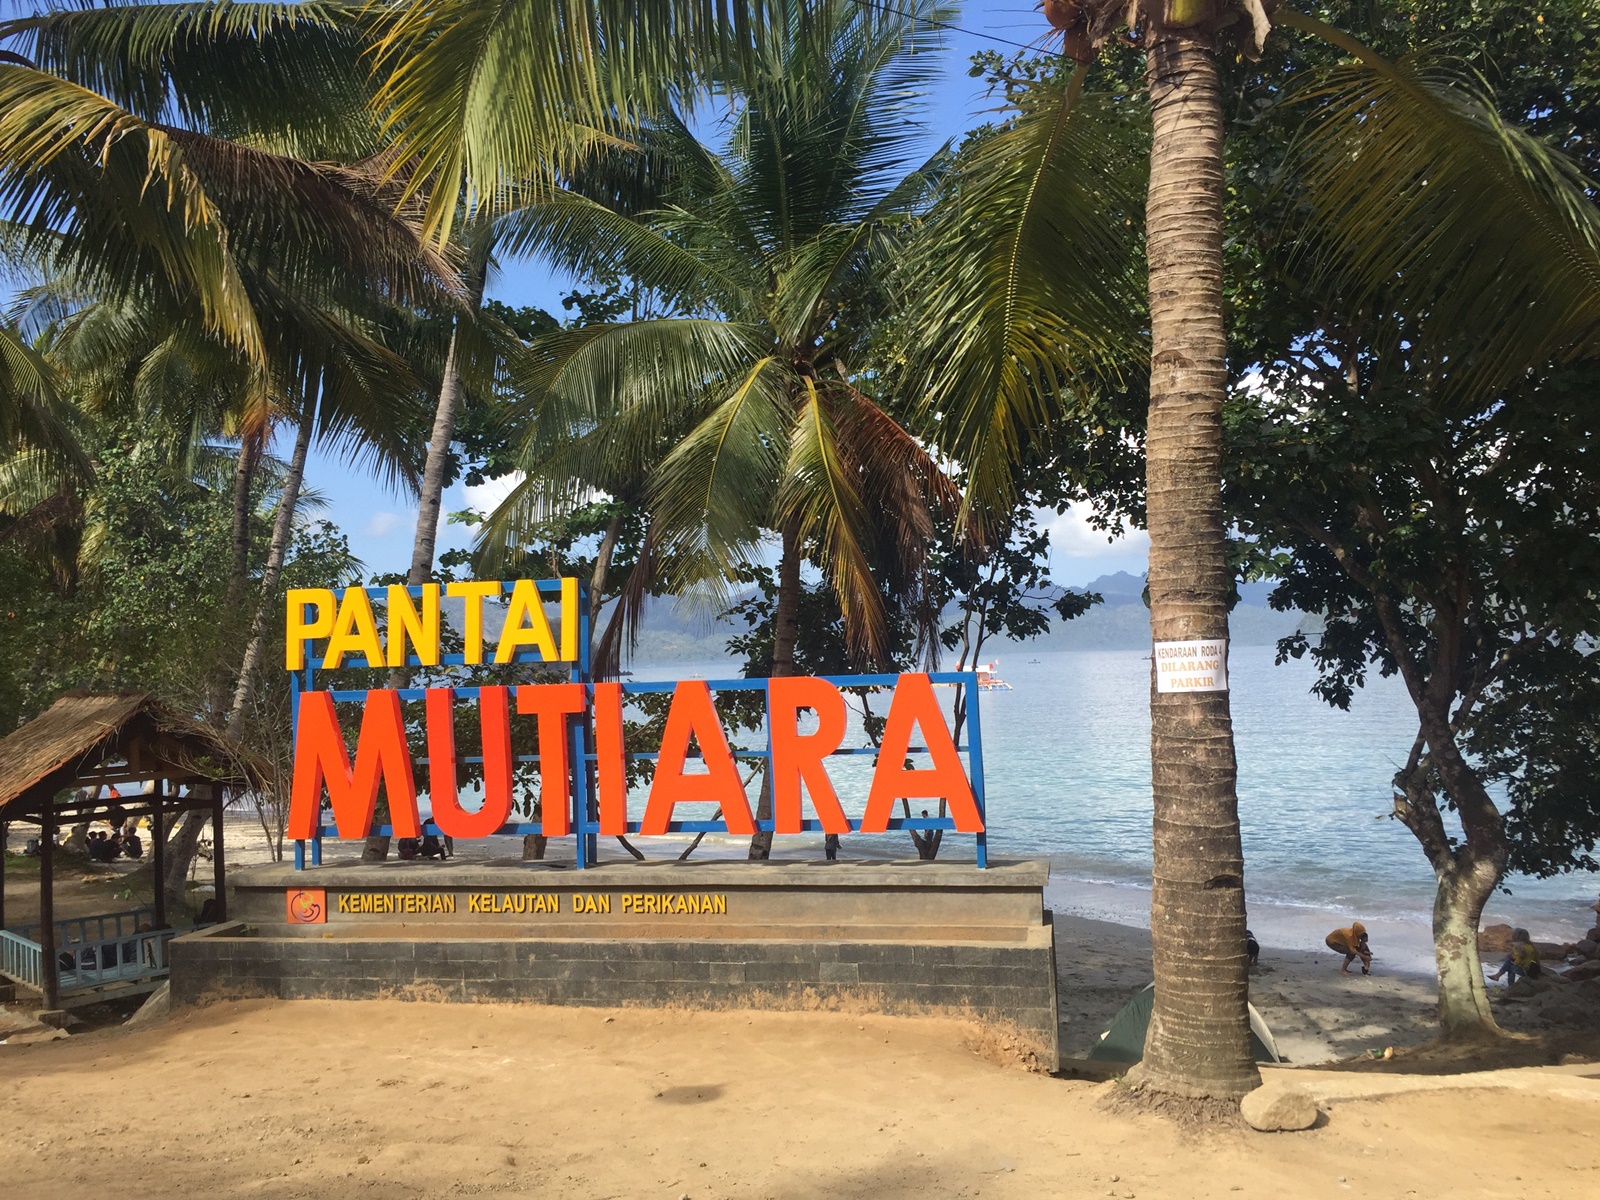 Nama Pantai Mutiara semakin meroket sejak dikunjungi dan dipromosikan oleh mantan menteri kelautan dan perikanan, Ibu Susi Pujiastuti